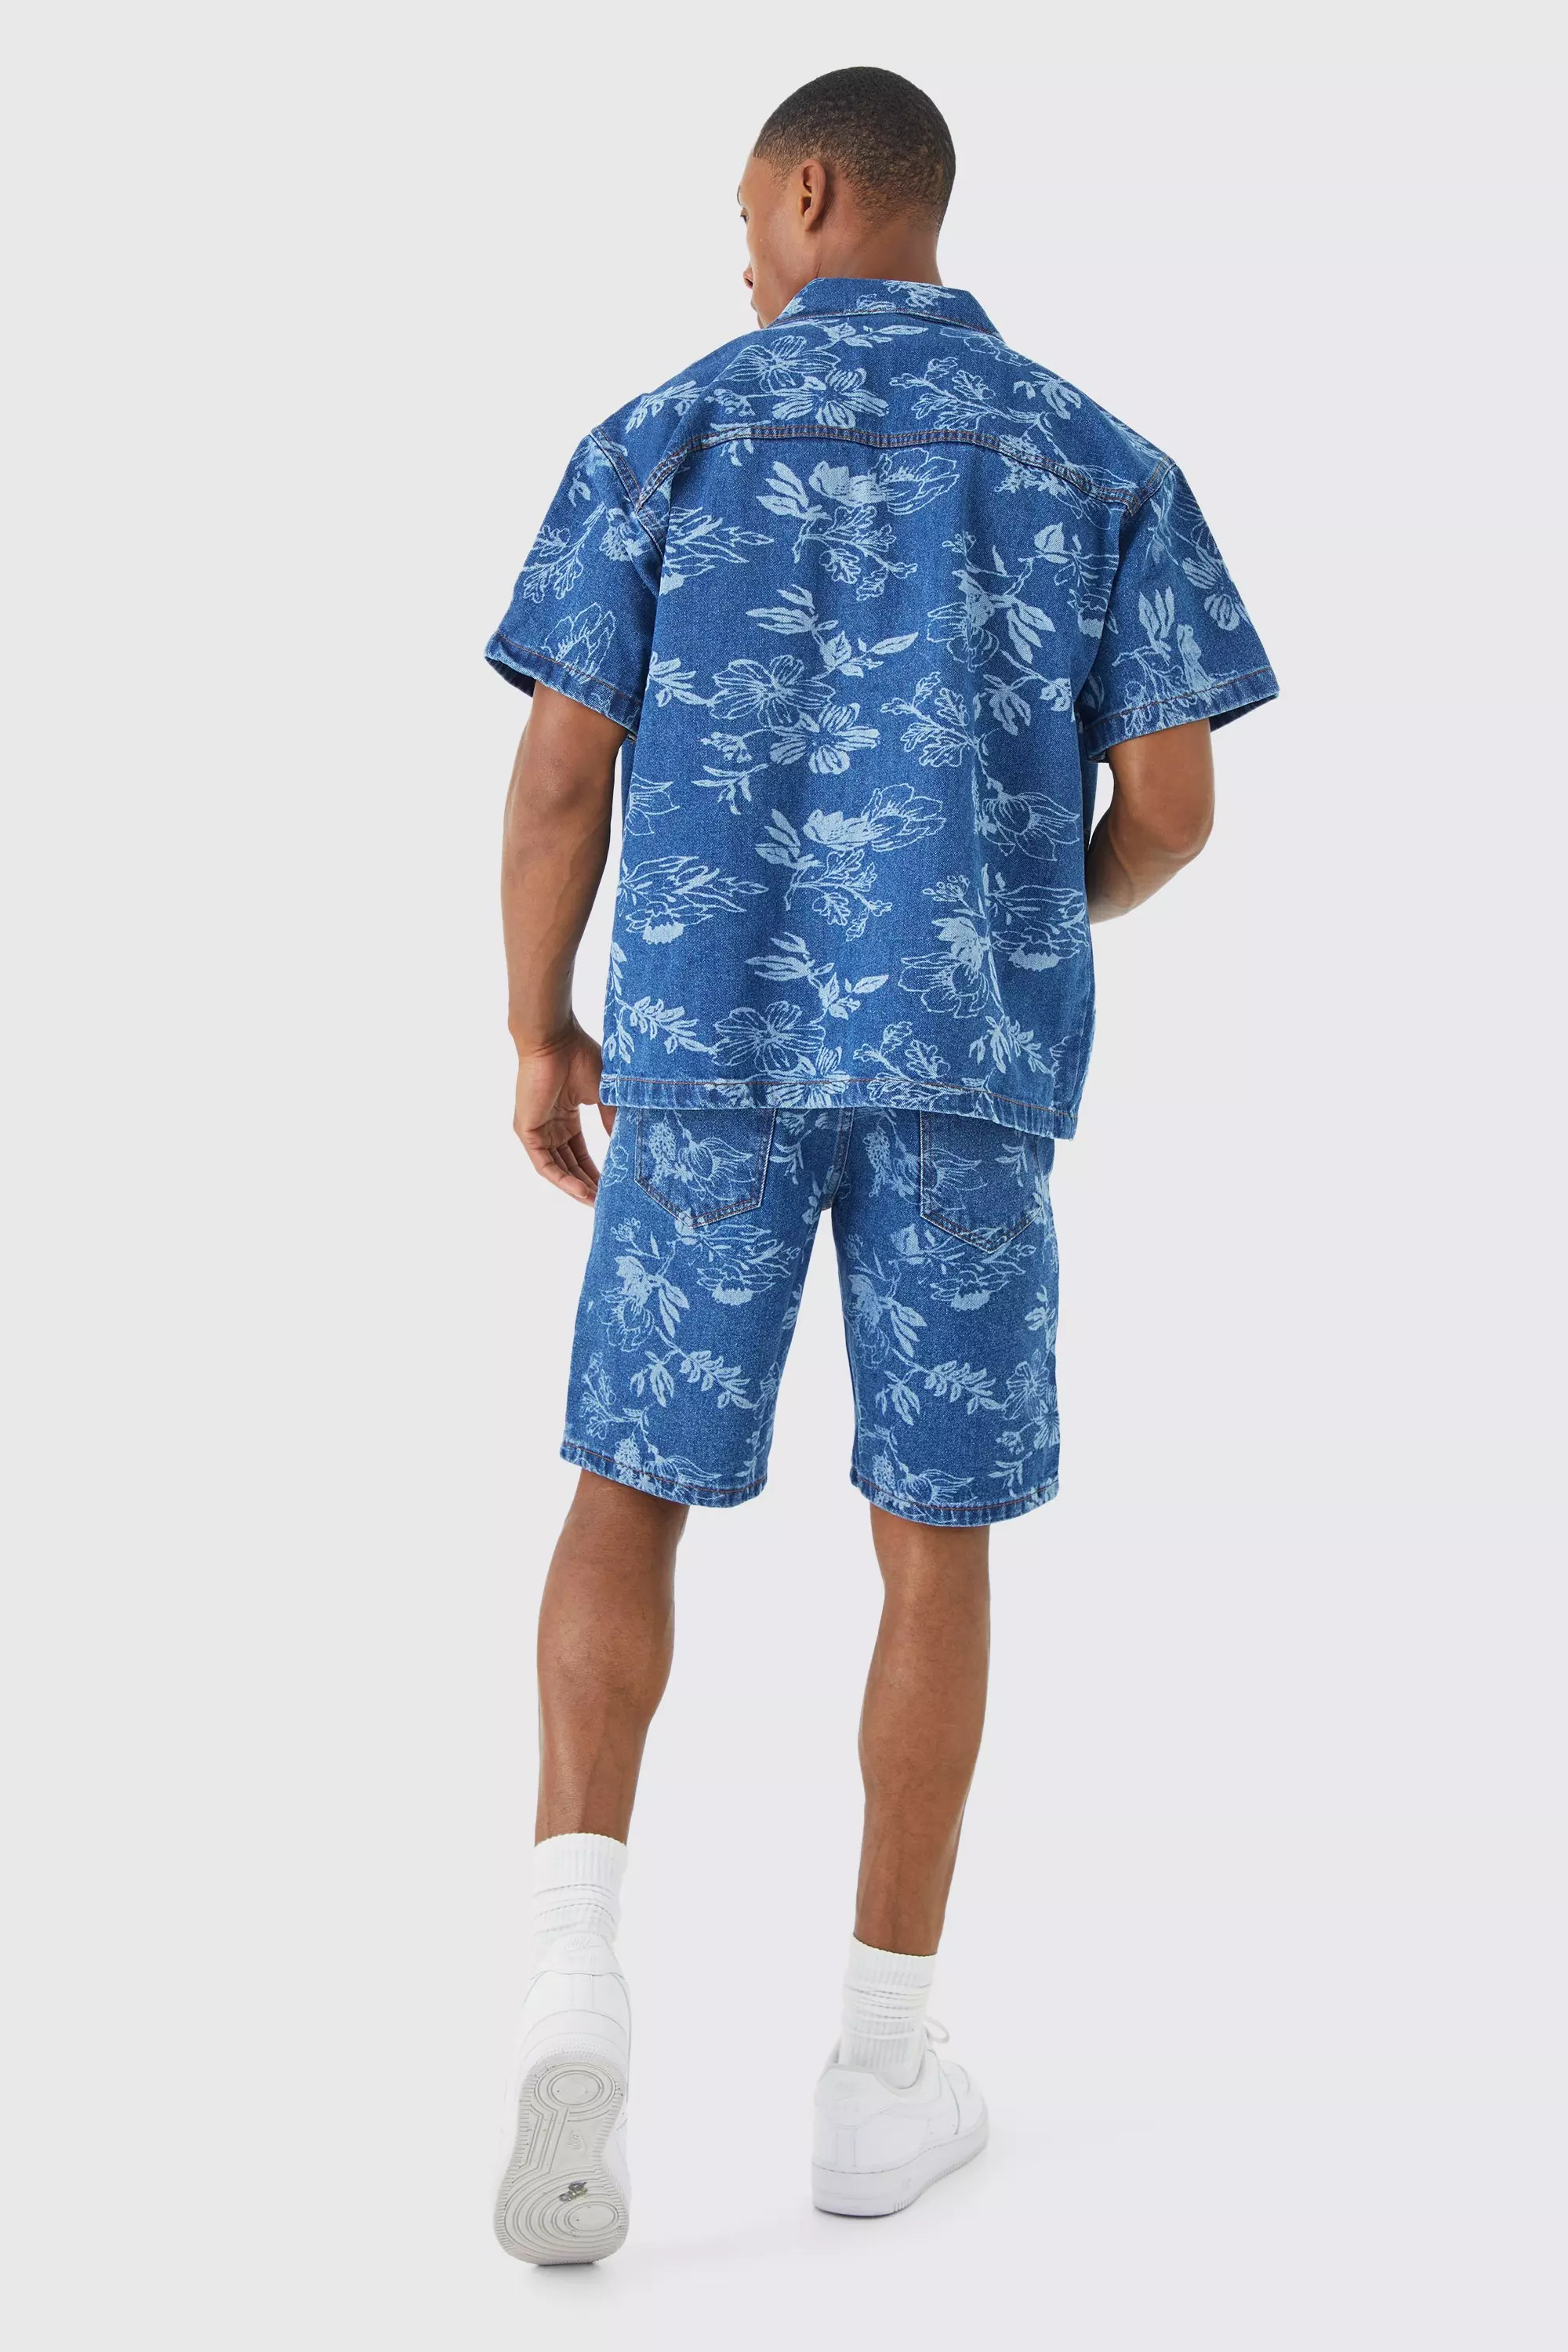 Printed Blue Men's Half Sleeve Denim Shirt